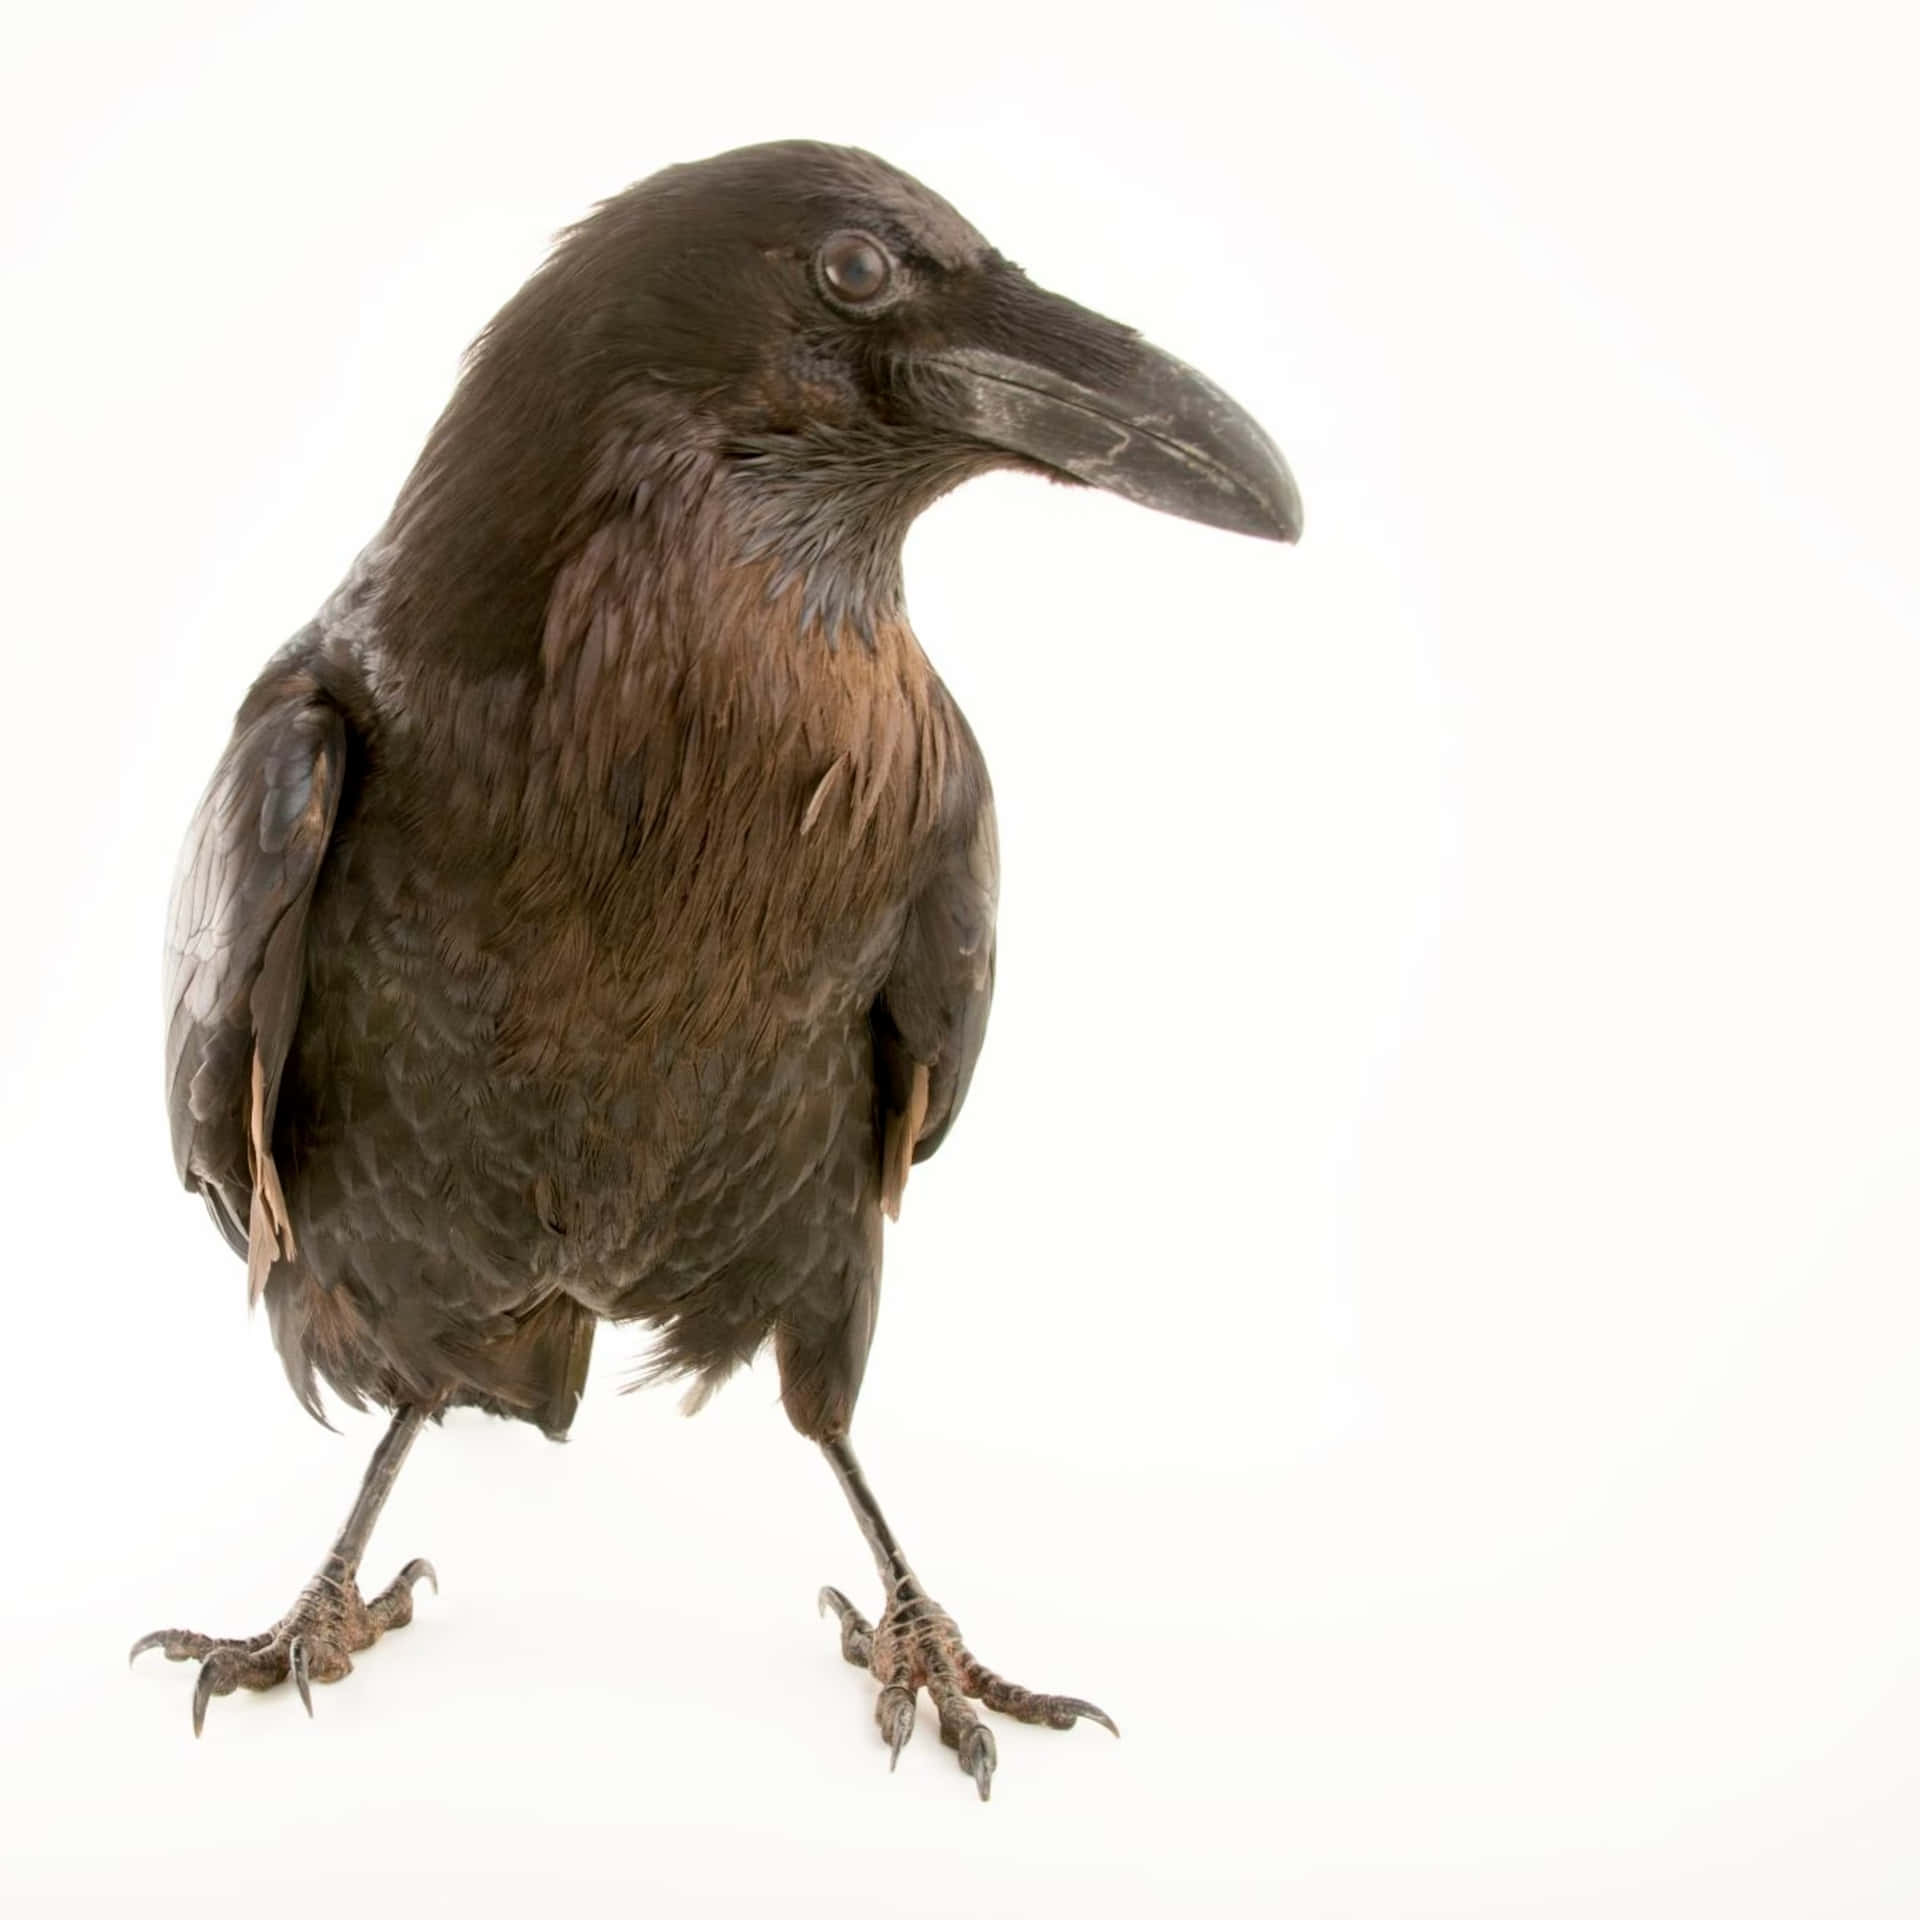 A beautiful Raven in its natural habitat